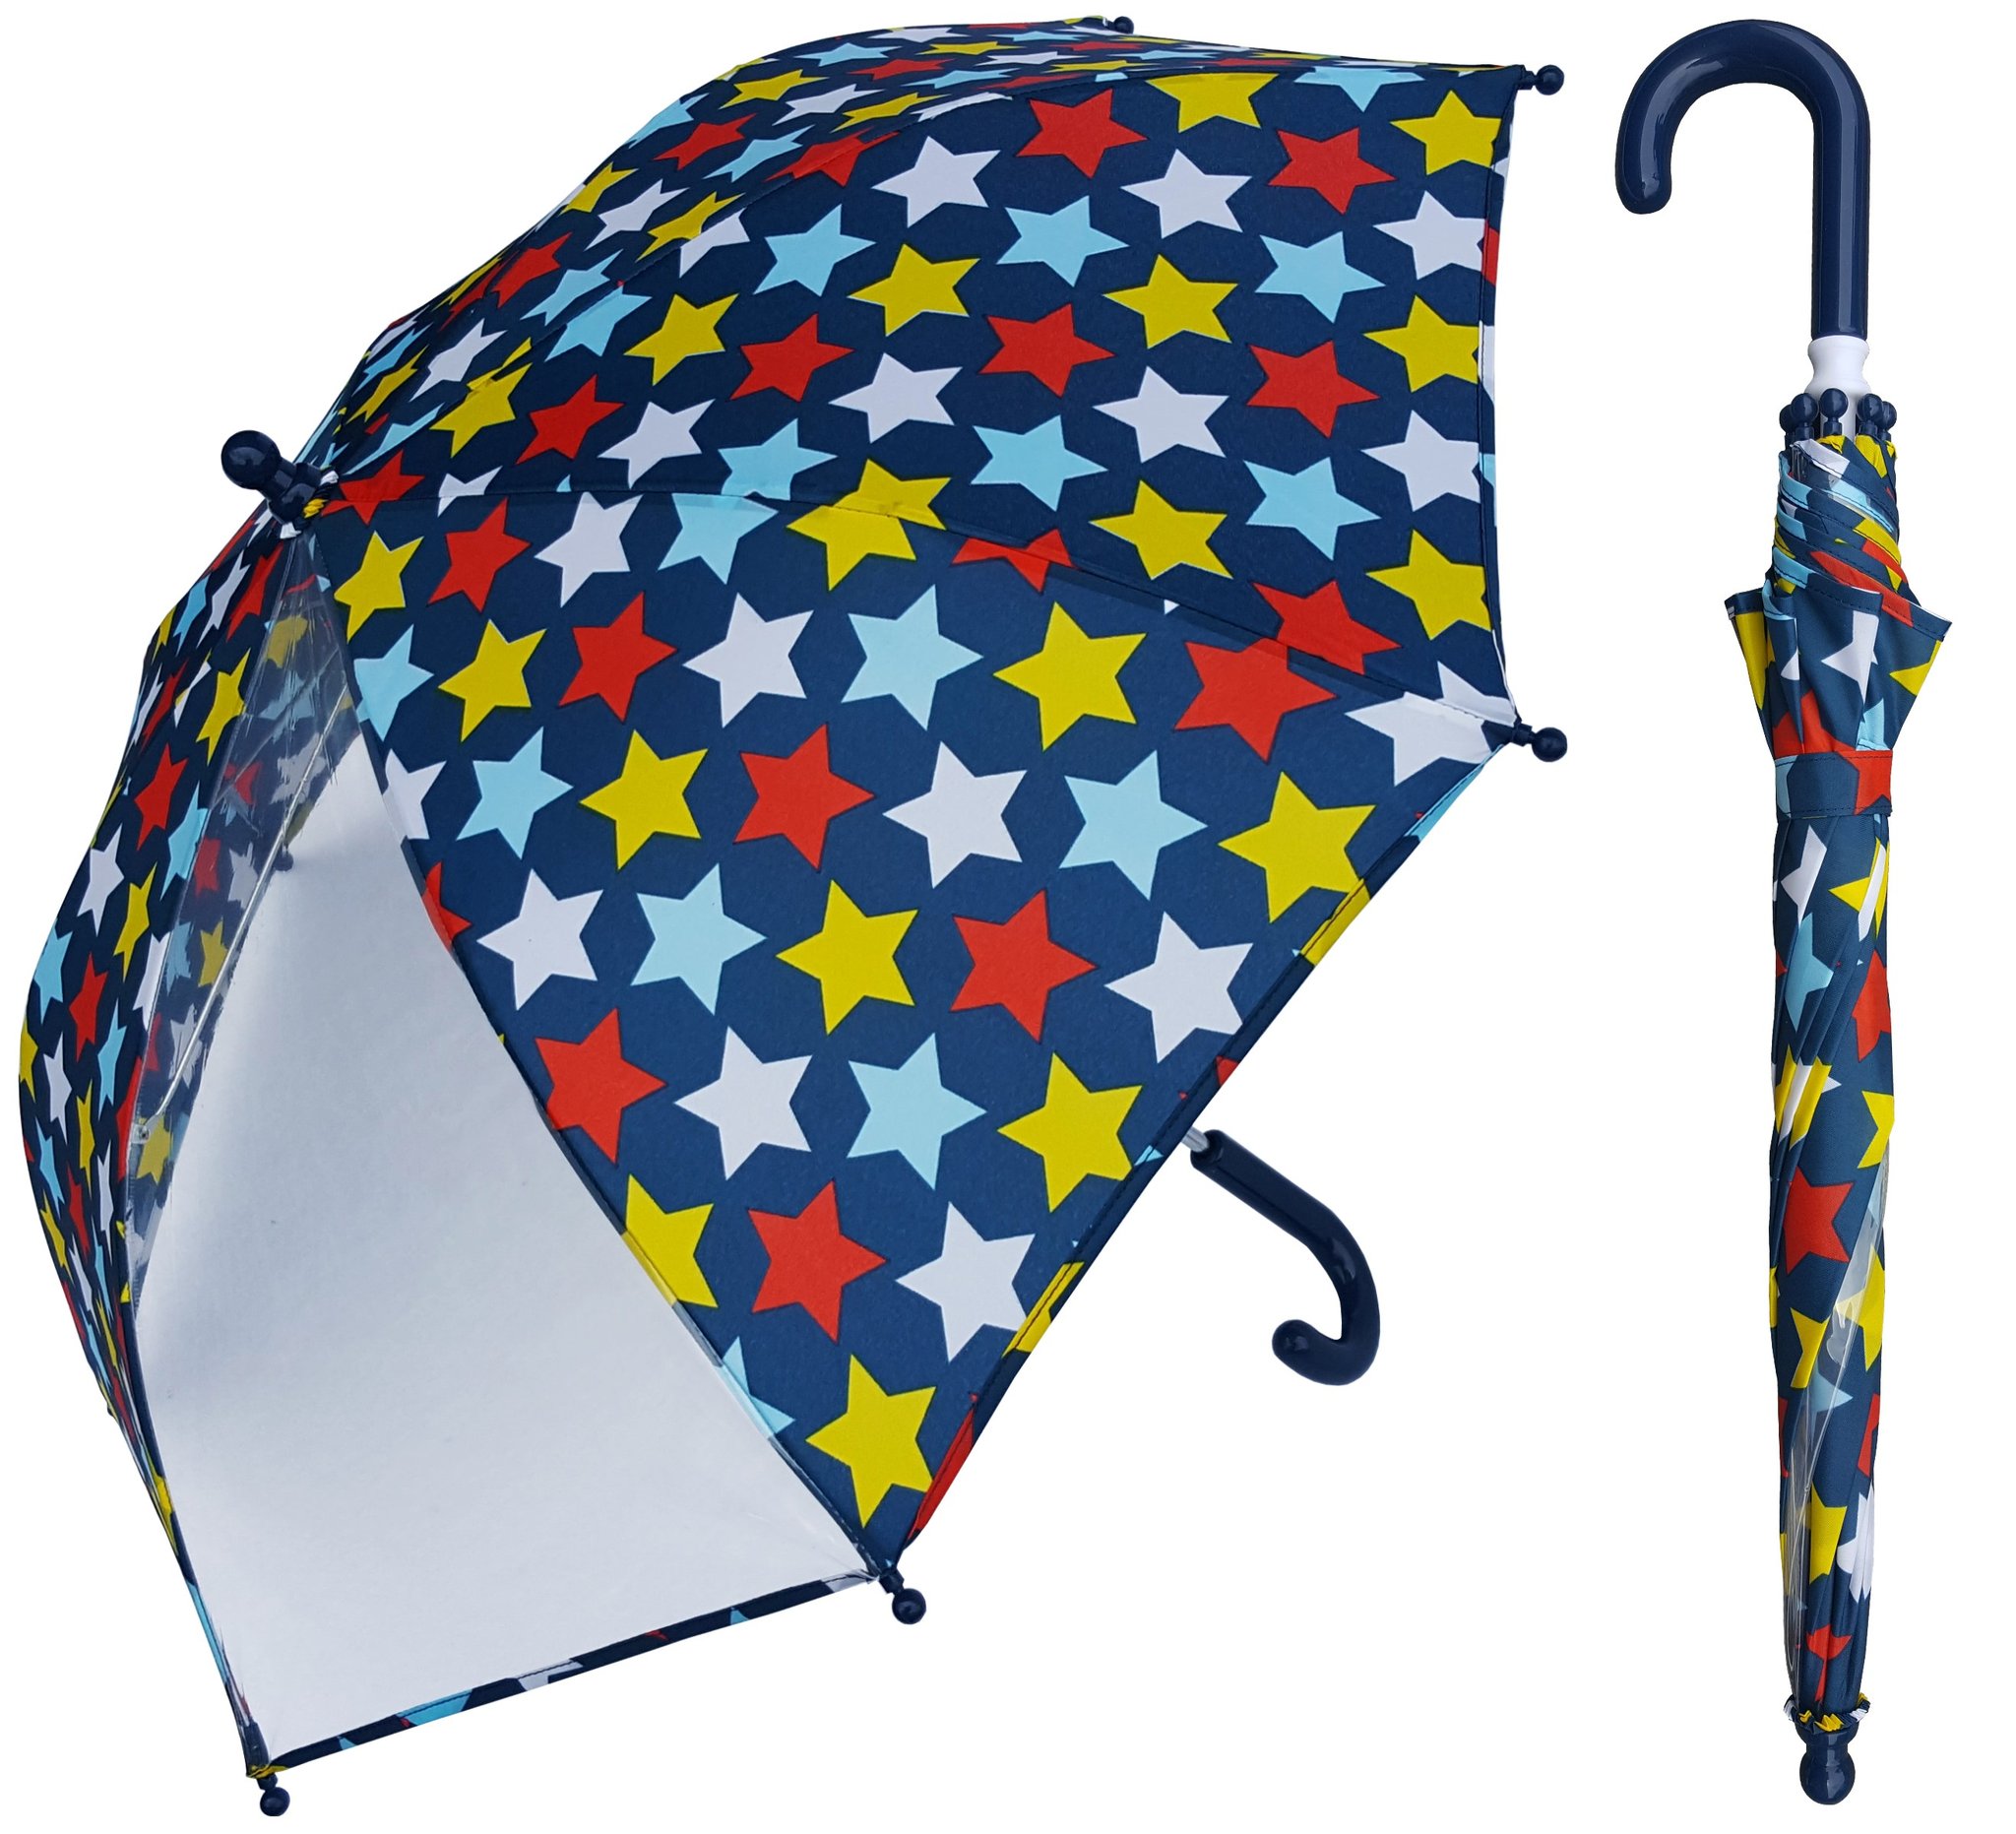 Custom design 19 inch kids umbrella. Start full color printing with POE panel.